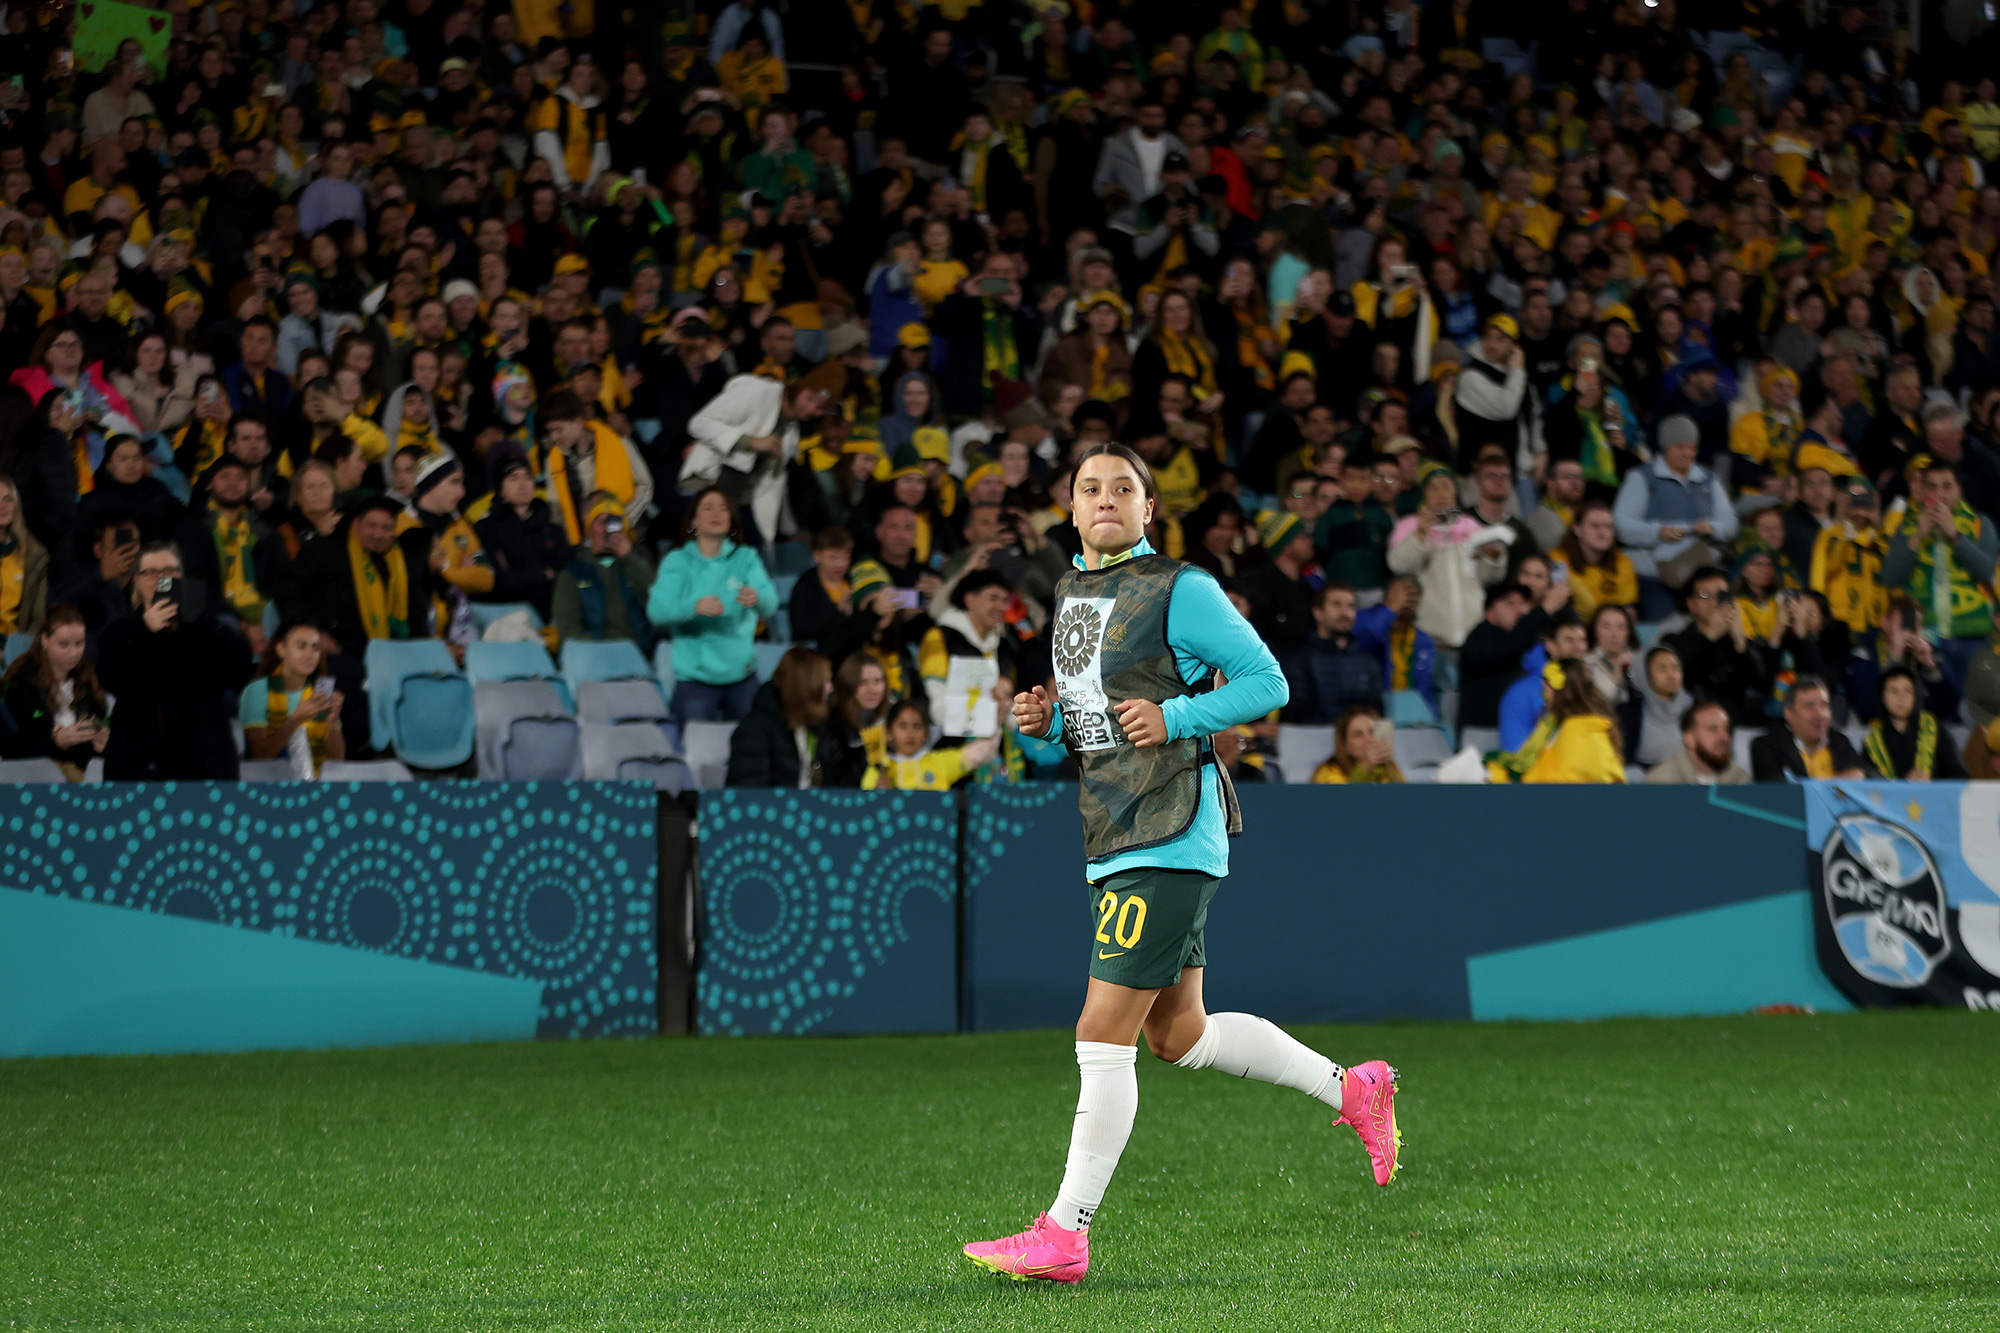 Matildas star Sam Kerr warms up during the match against Denmark in Sydney on August 7. 